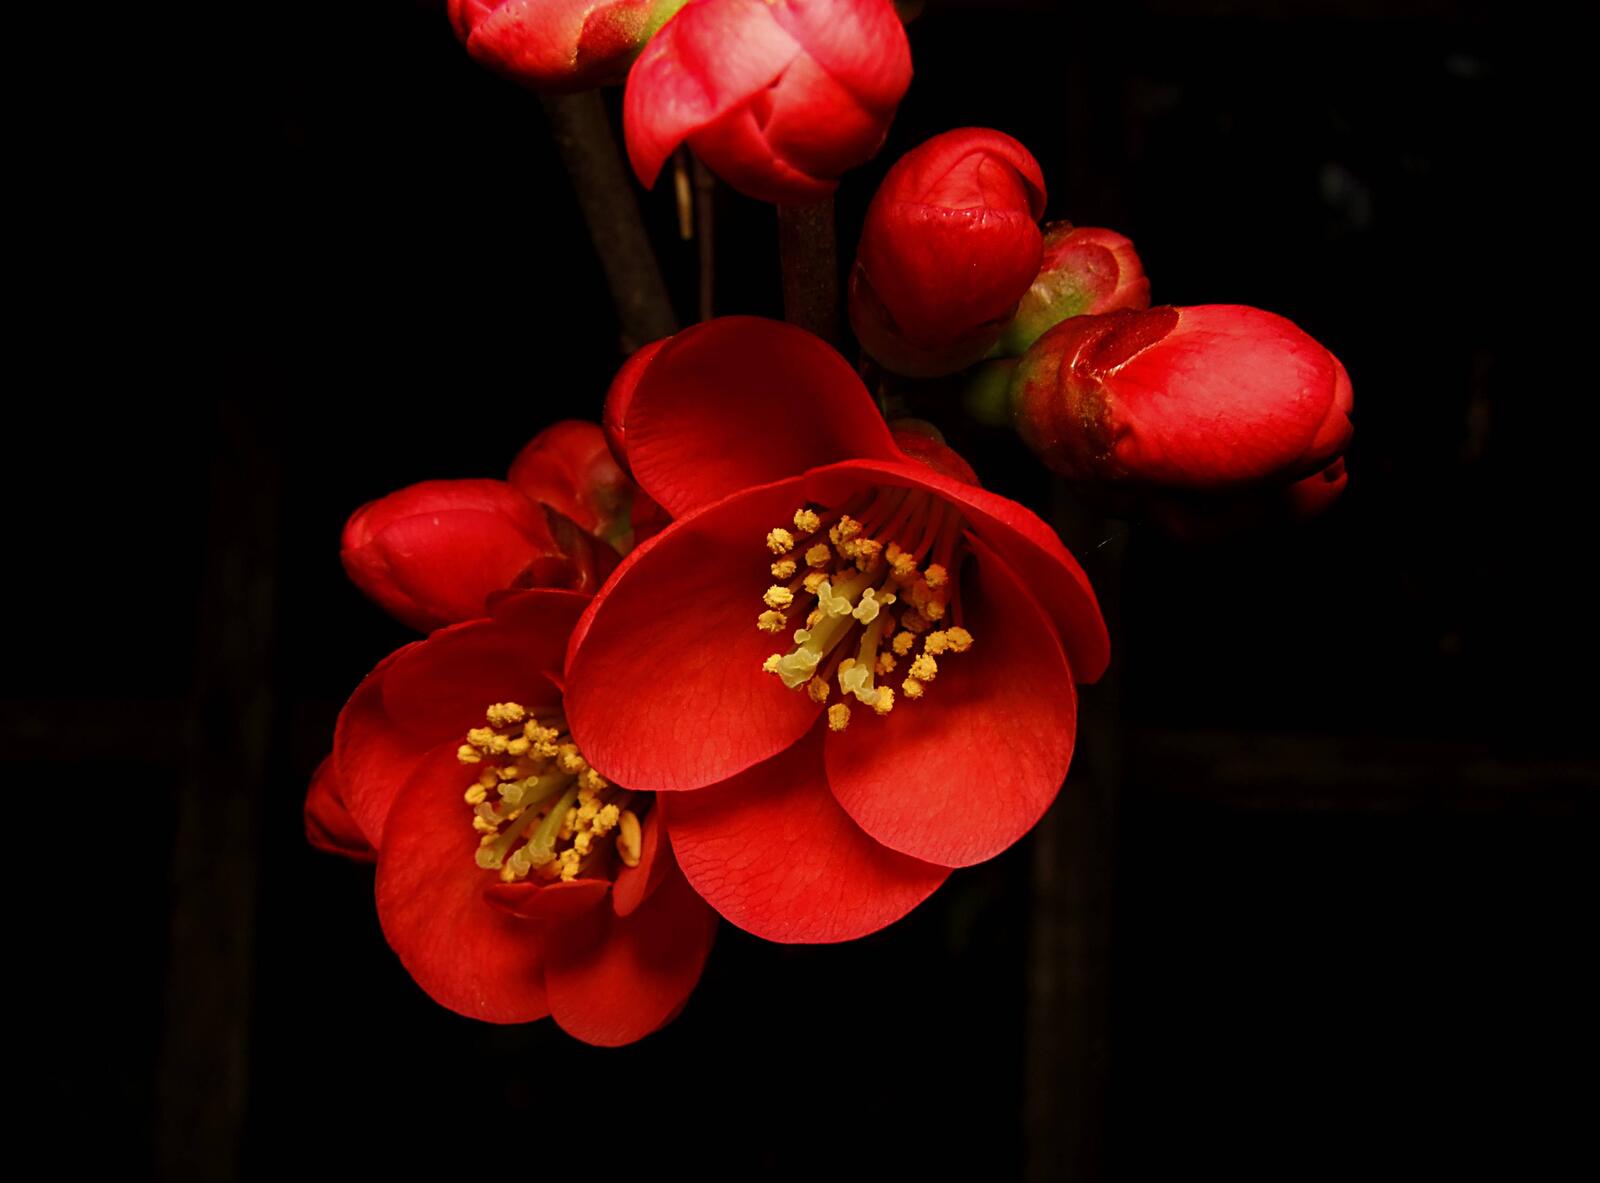 Wallpapers sakura red flowers small flowers on the desktop